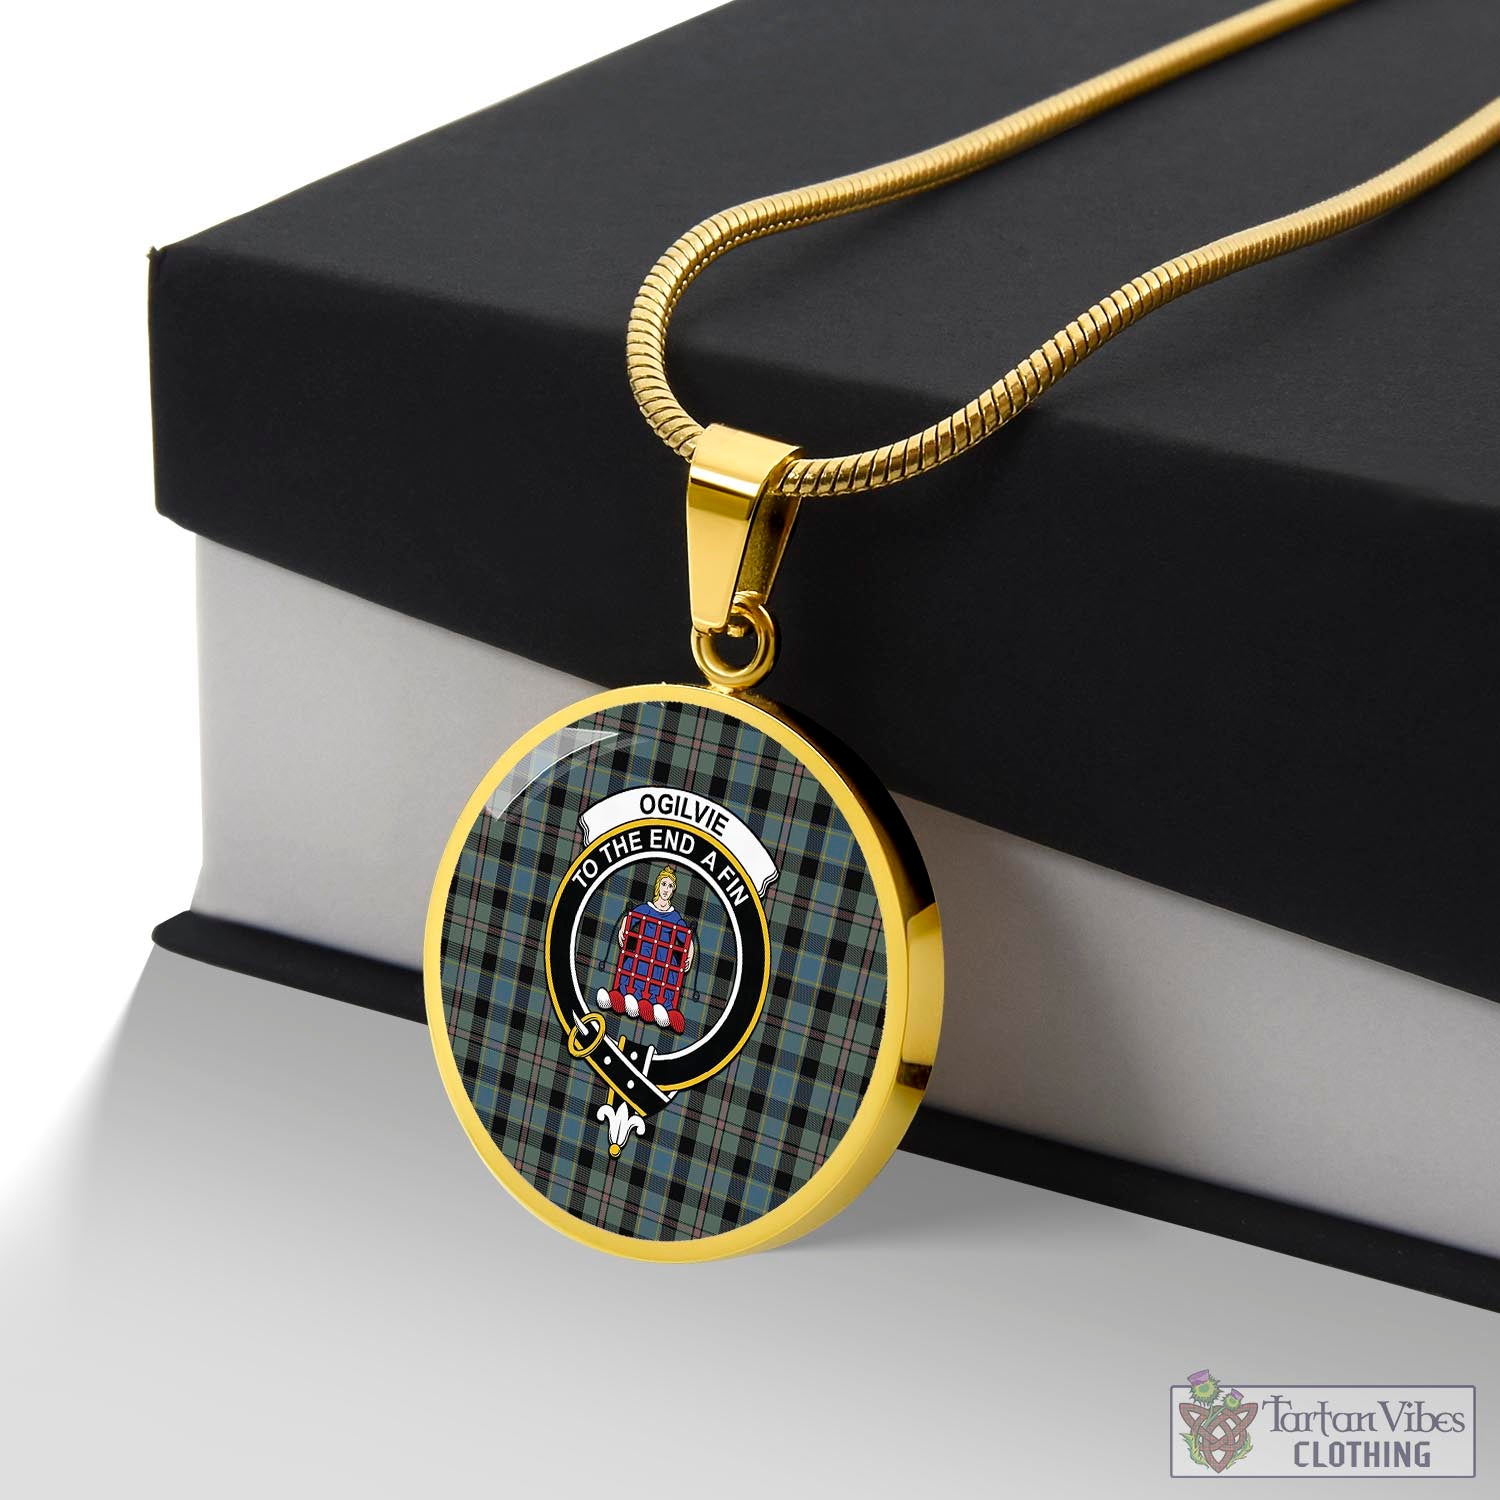 Tartan Vibes Clothing Ogilvie (Ogilvy) Hunting Tartan Circle Necklace with Family Crest